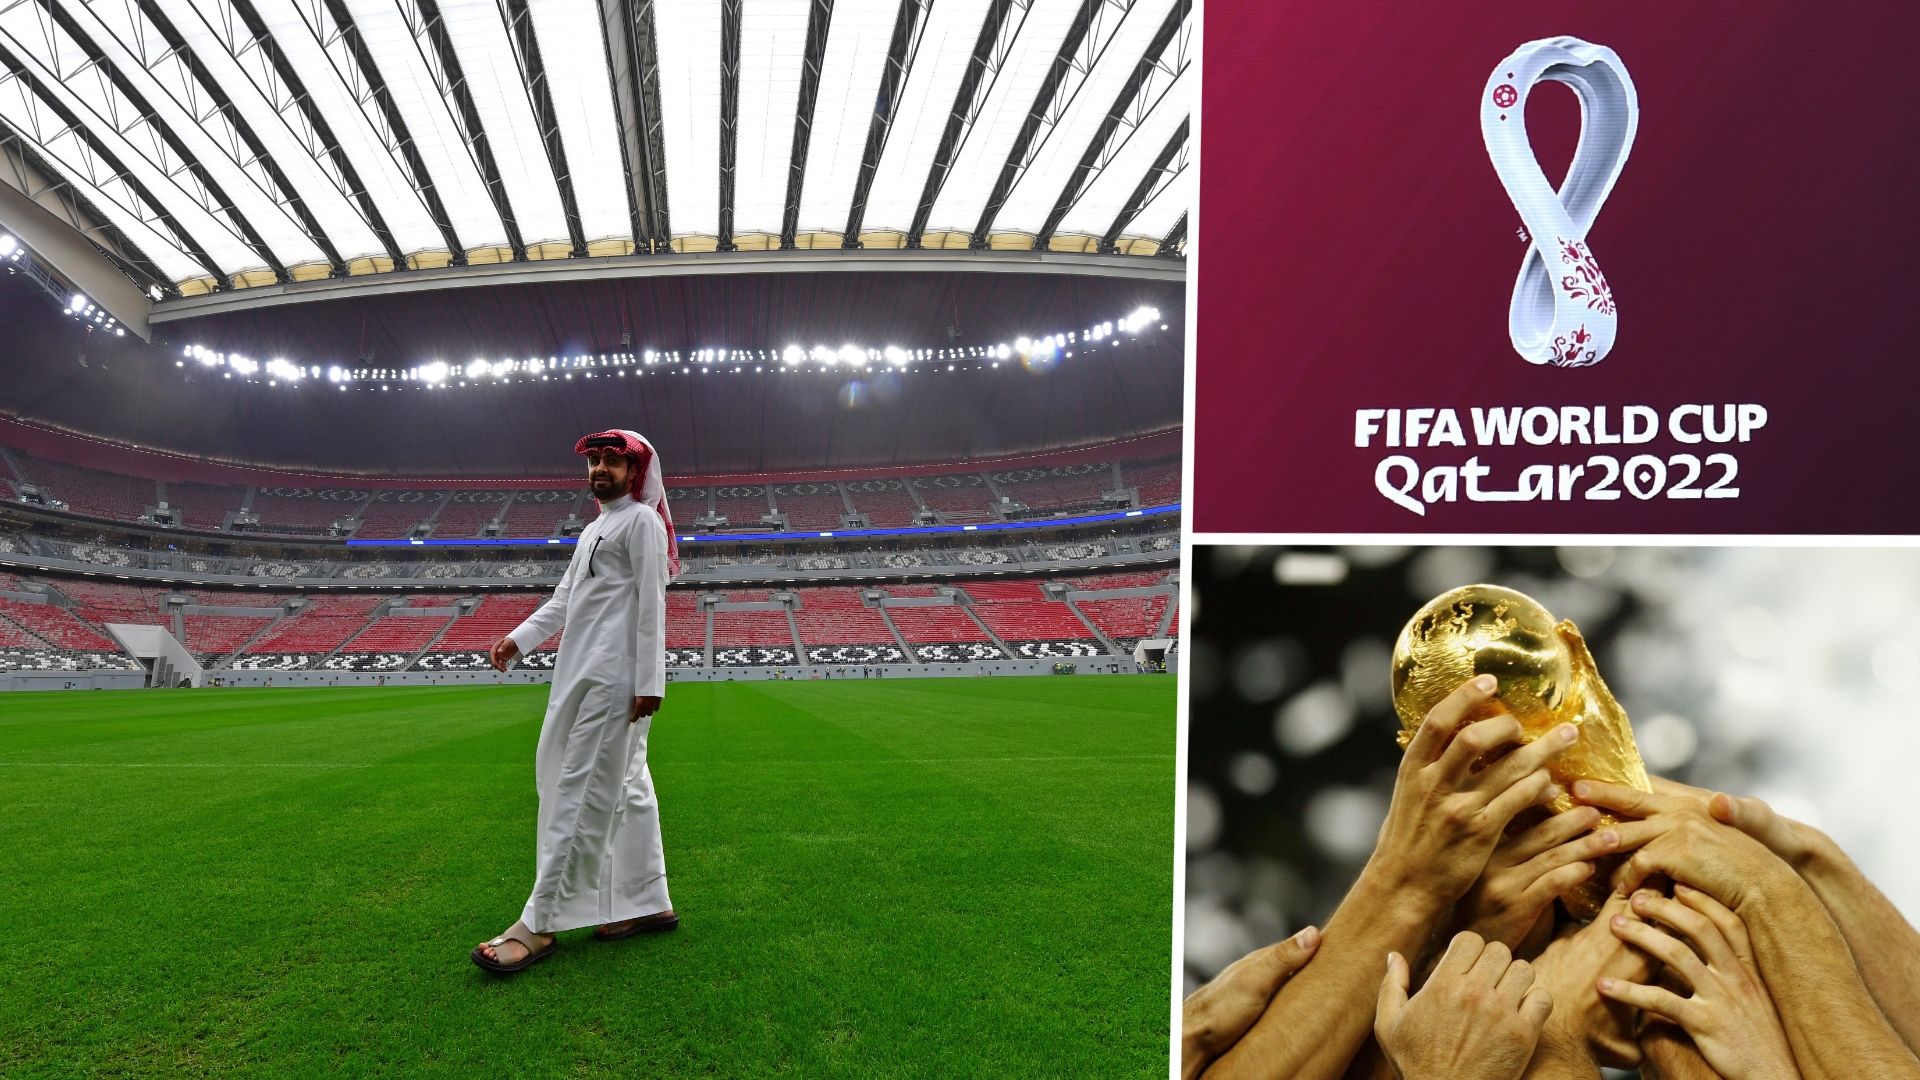 Doha, Qatar Prepares To Host The FIFA World Cup 2022